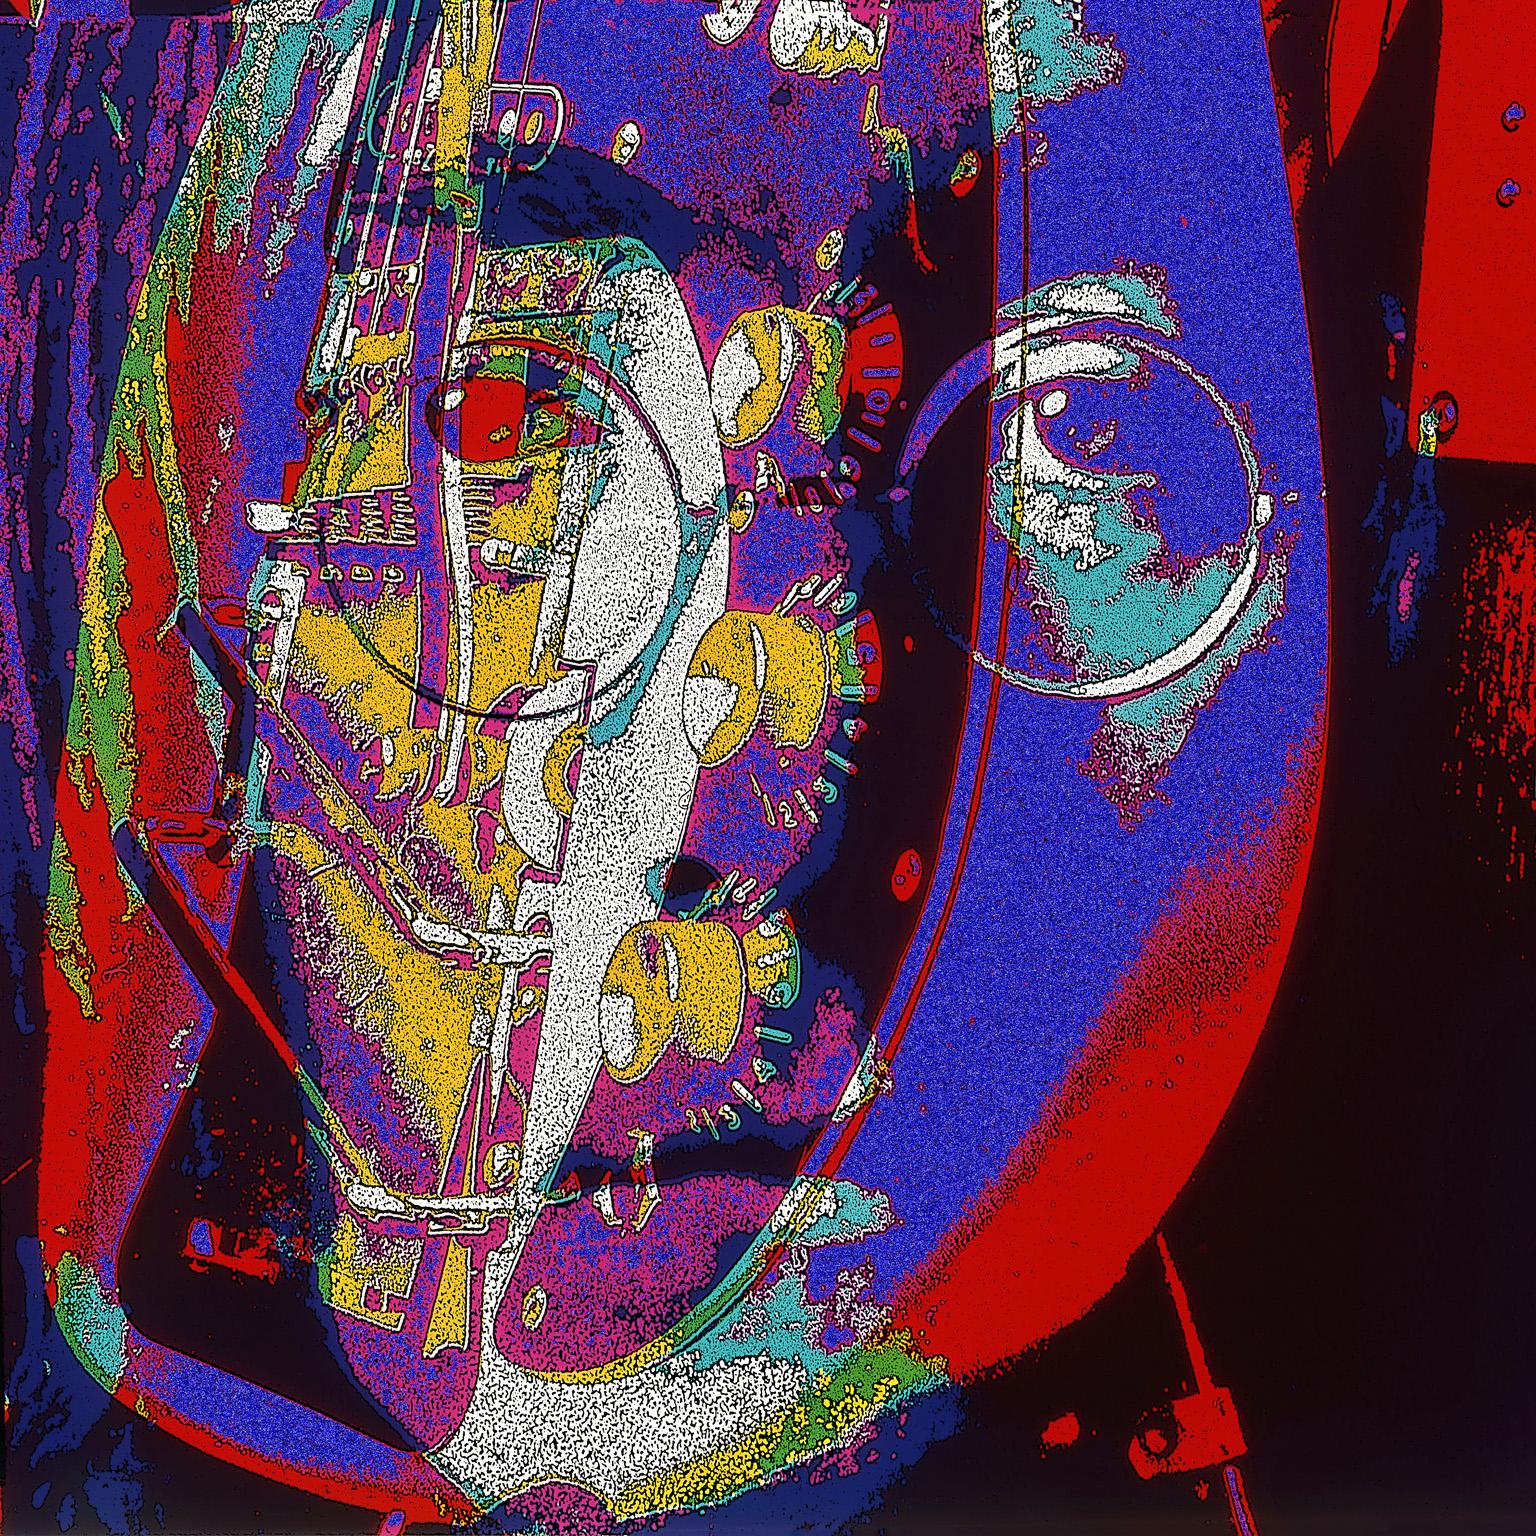 John Lennon - Beatles, Pop Art, in Red, Purple and Yellow